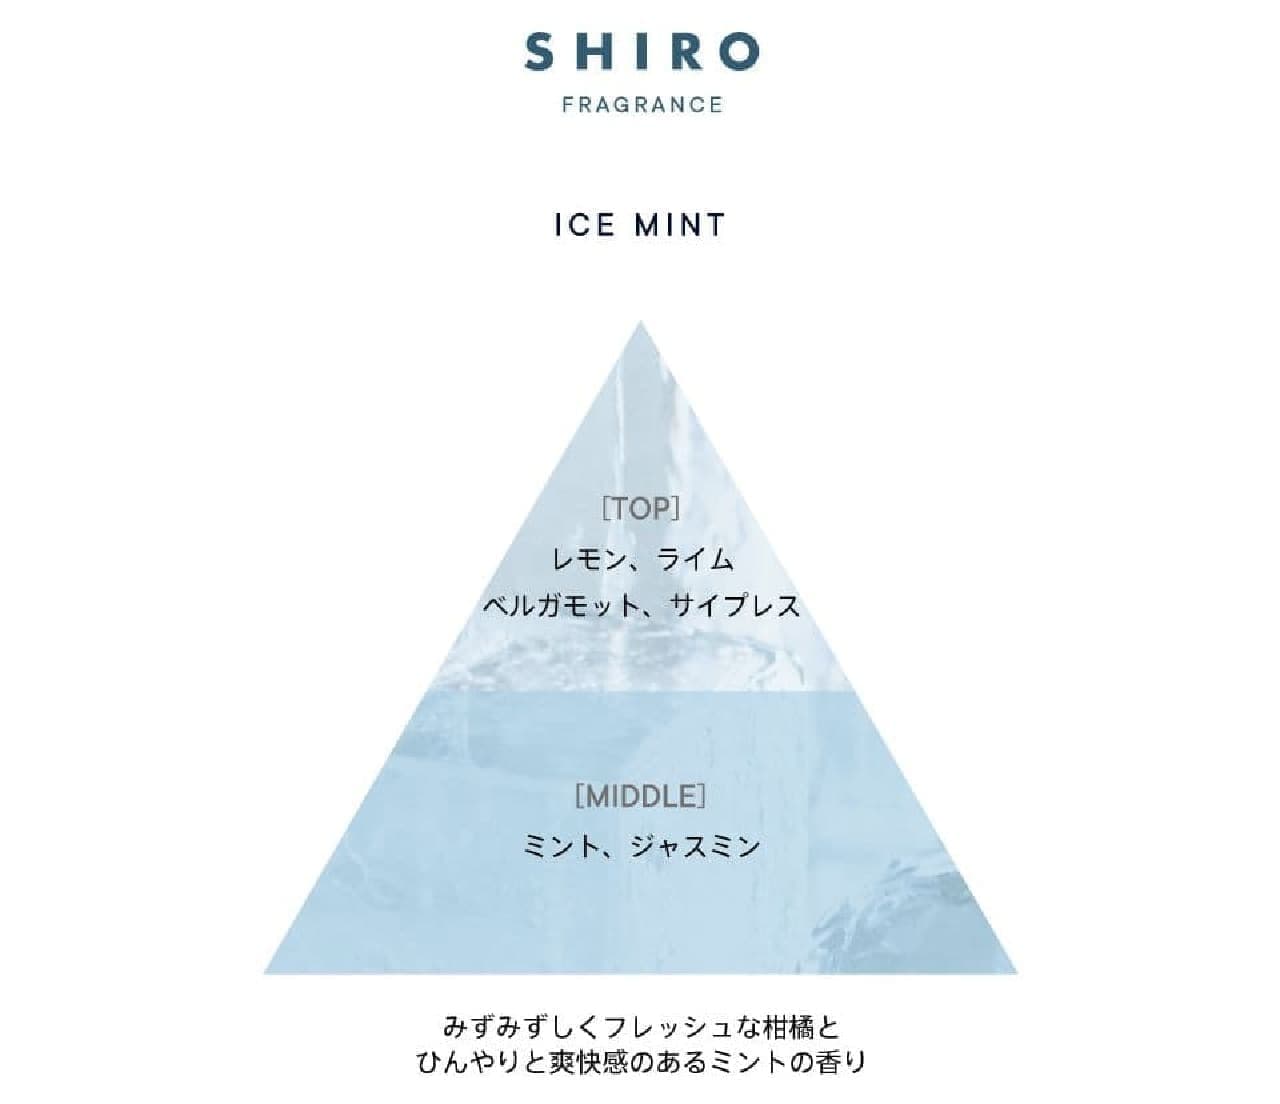 SHIRO "Ice Mint